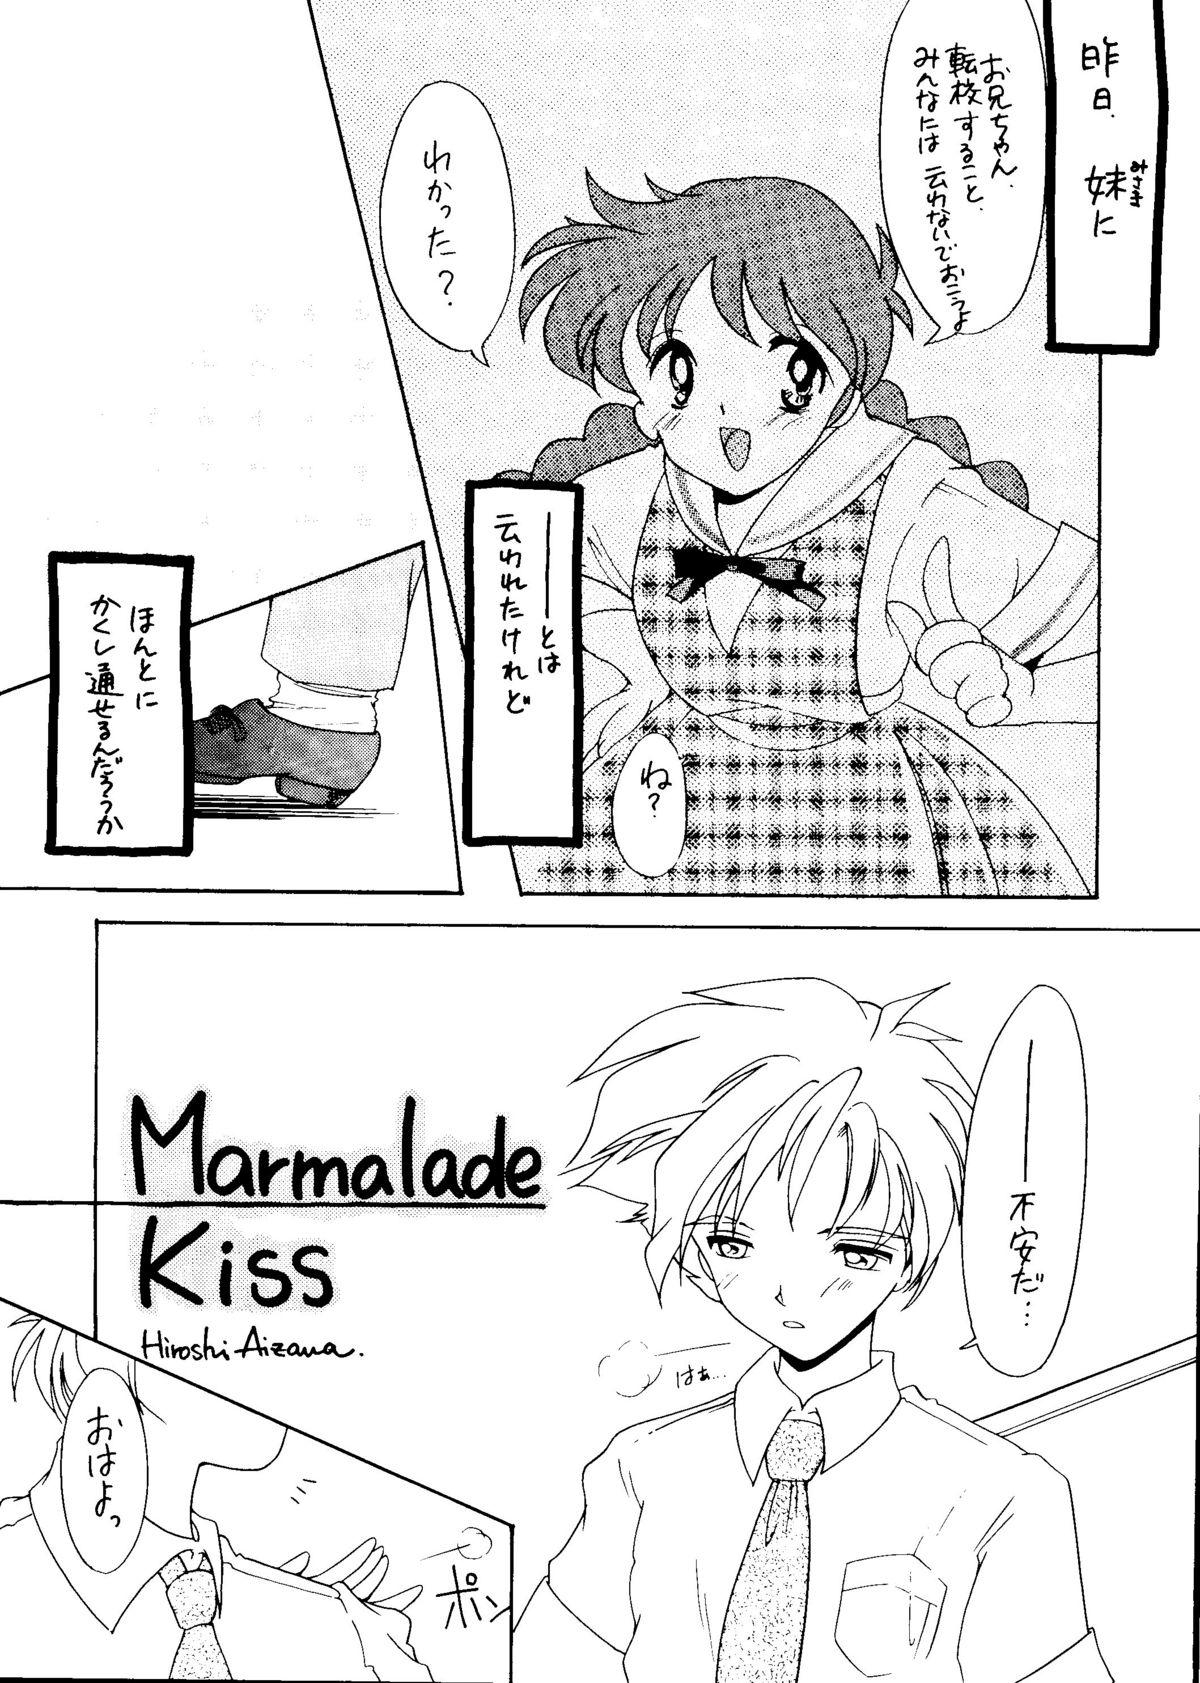 Deep Throat Marmalade Kiss - True love story Camgirls - Page 11